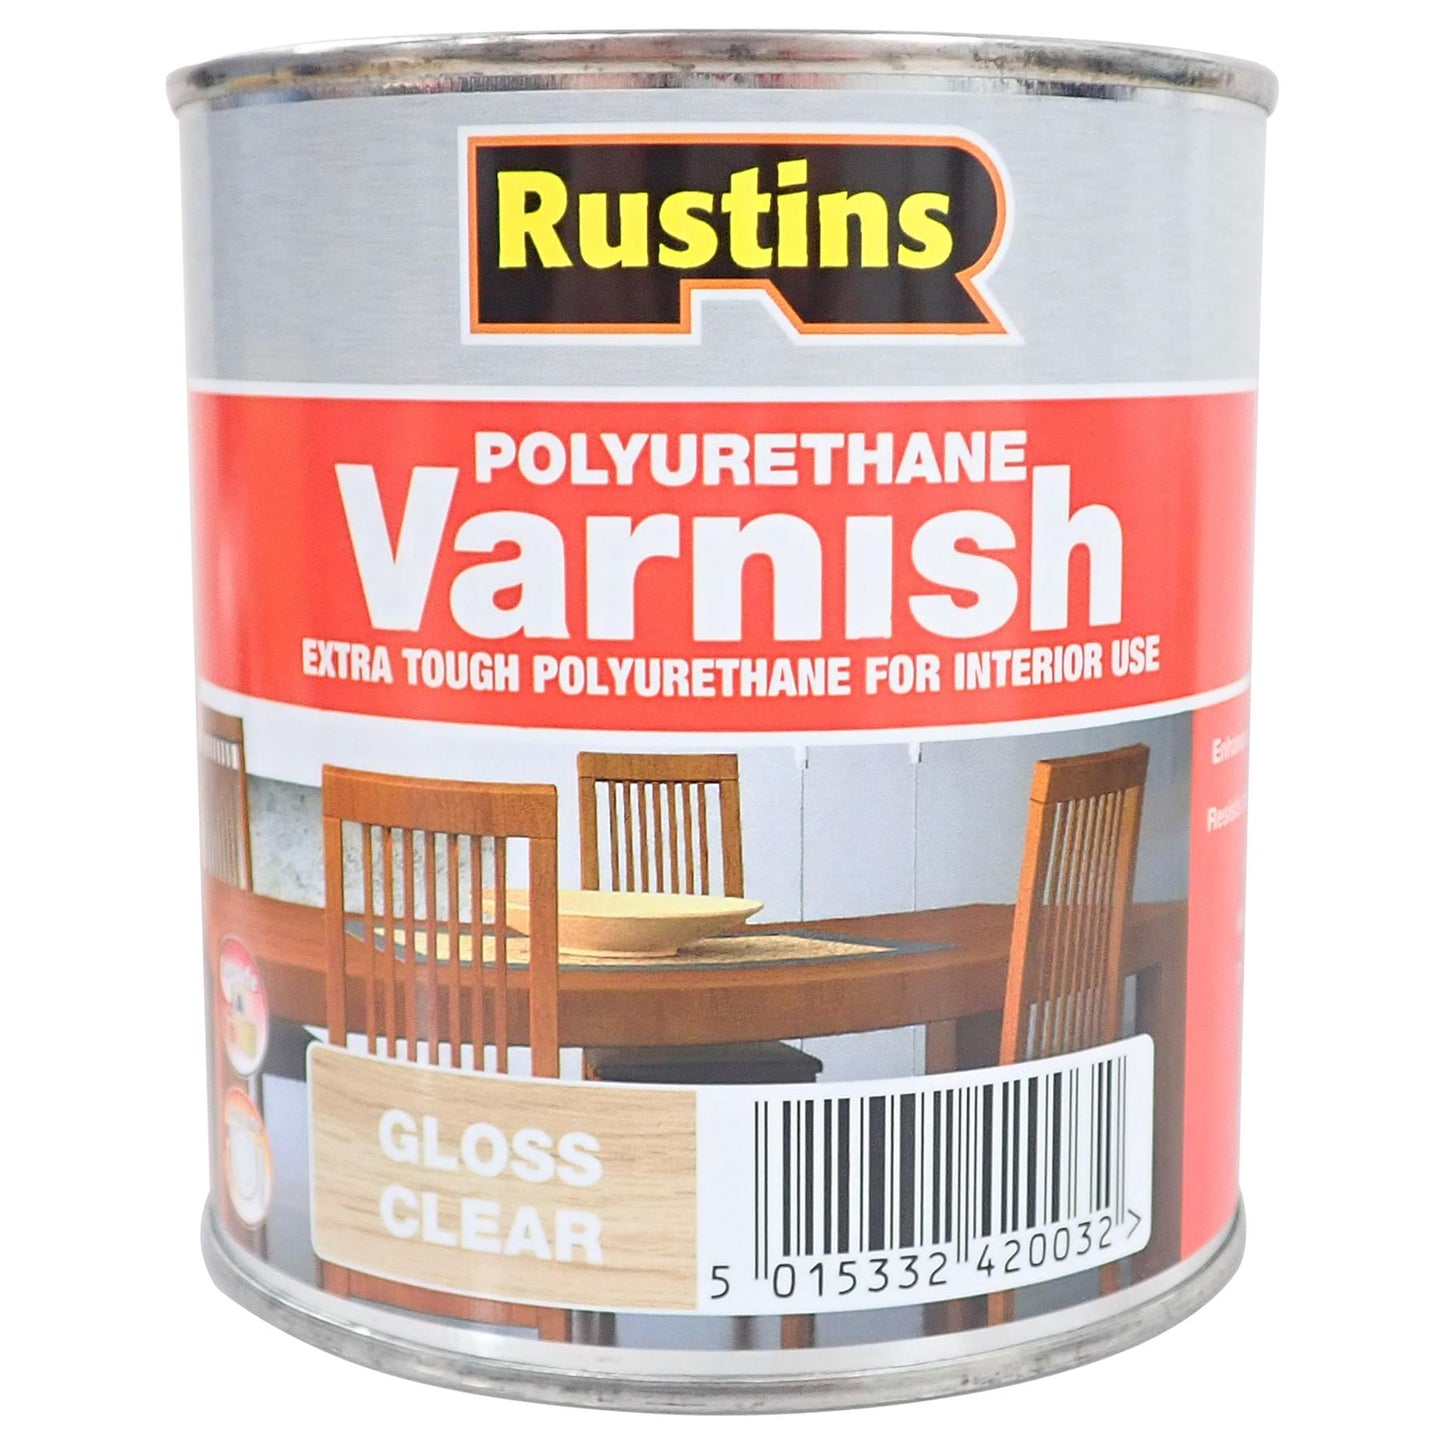 Rustins Gloss Clear Polyurethane Varnish 500ml Tin